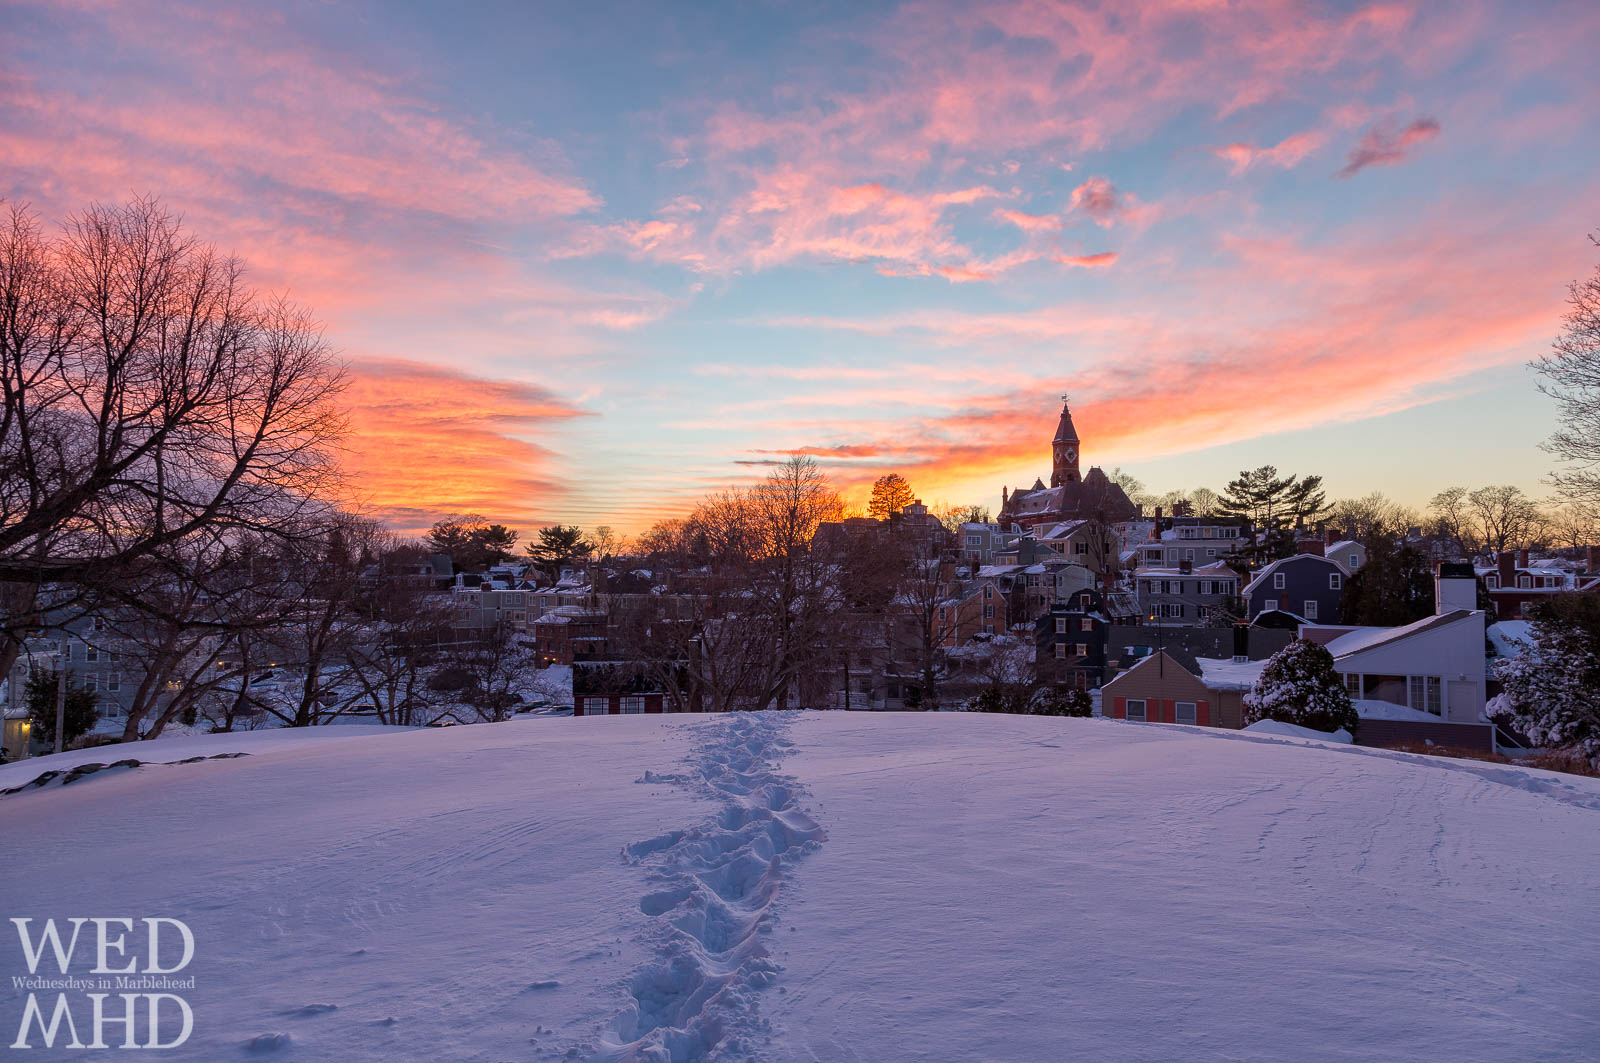 Snow reflects sunset's colors at Crocker Park